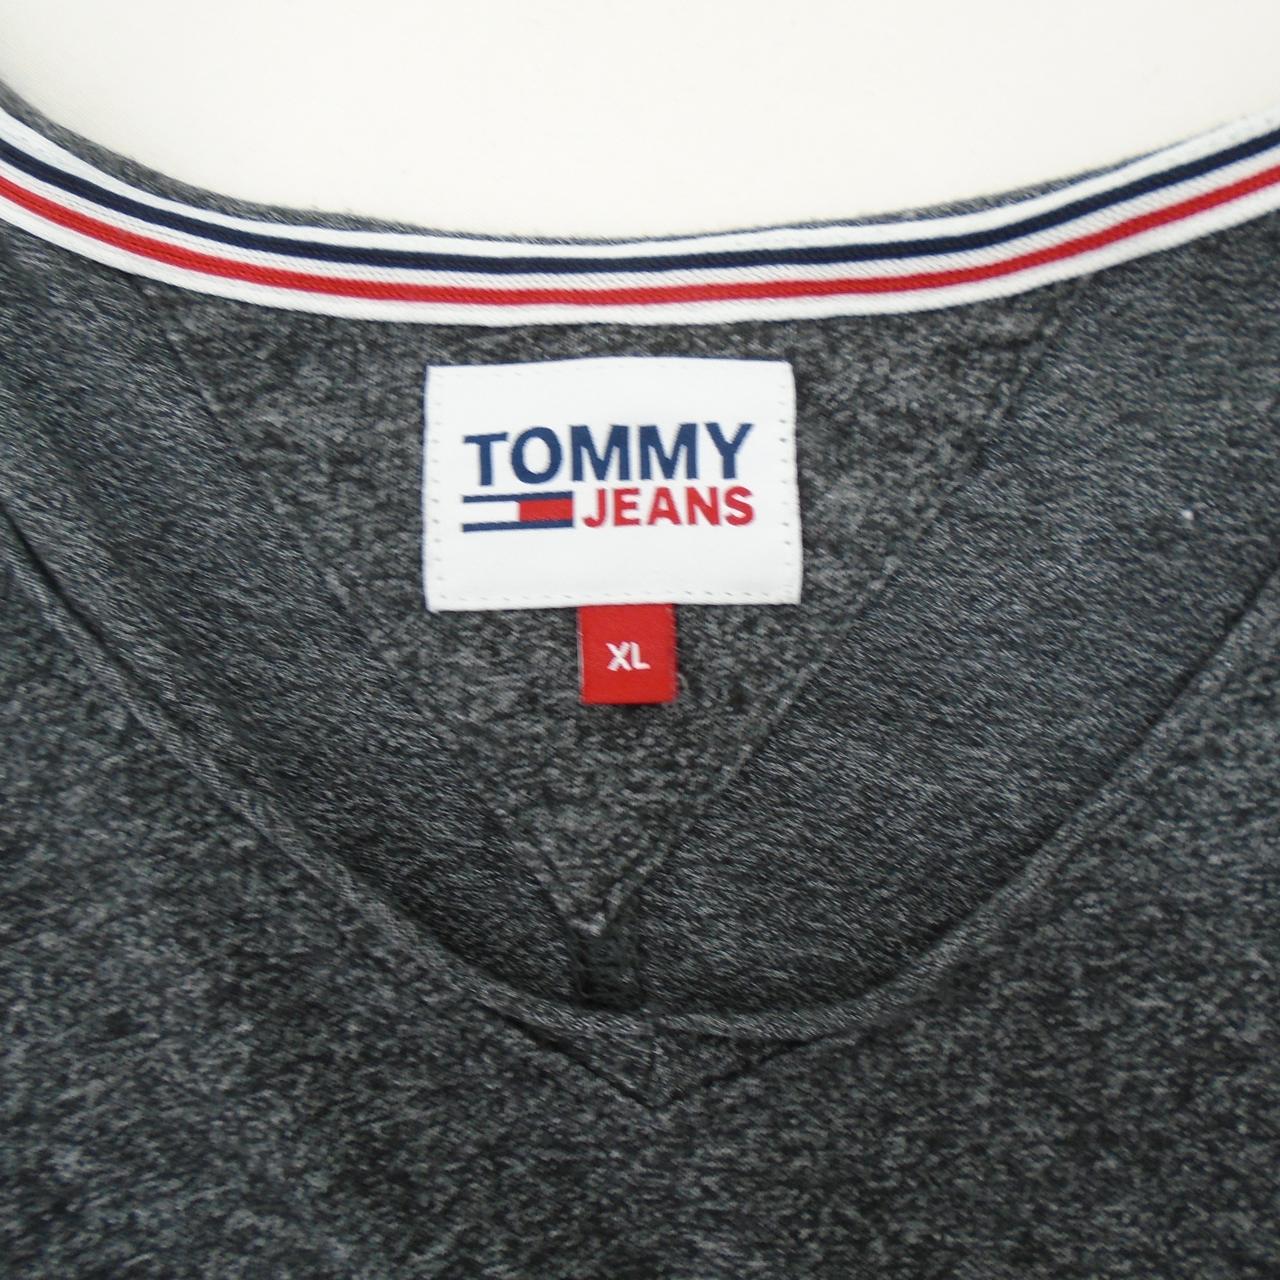 Camiseta Hombre Tommy Hilfiger. Gris. SG. Usado. Bien